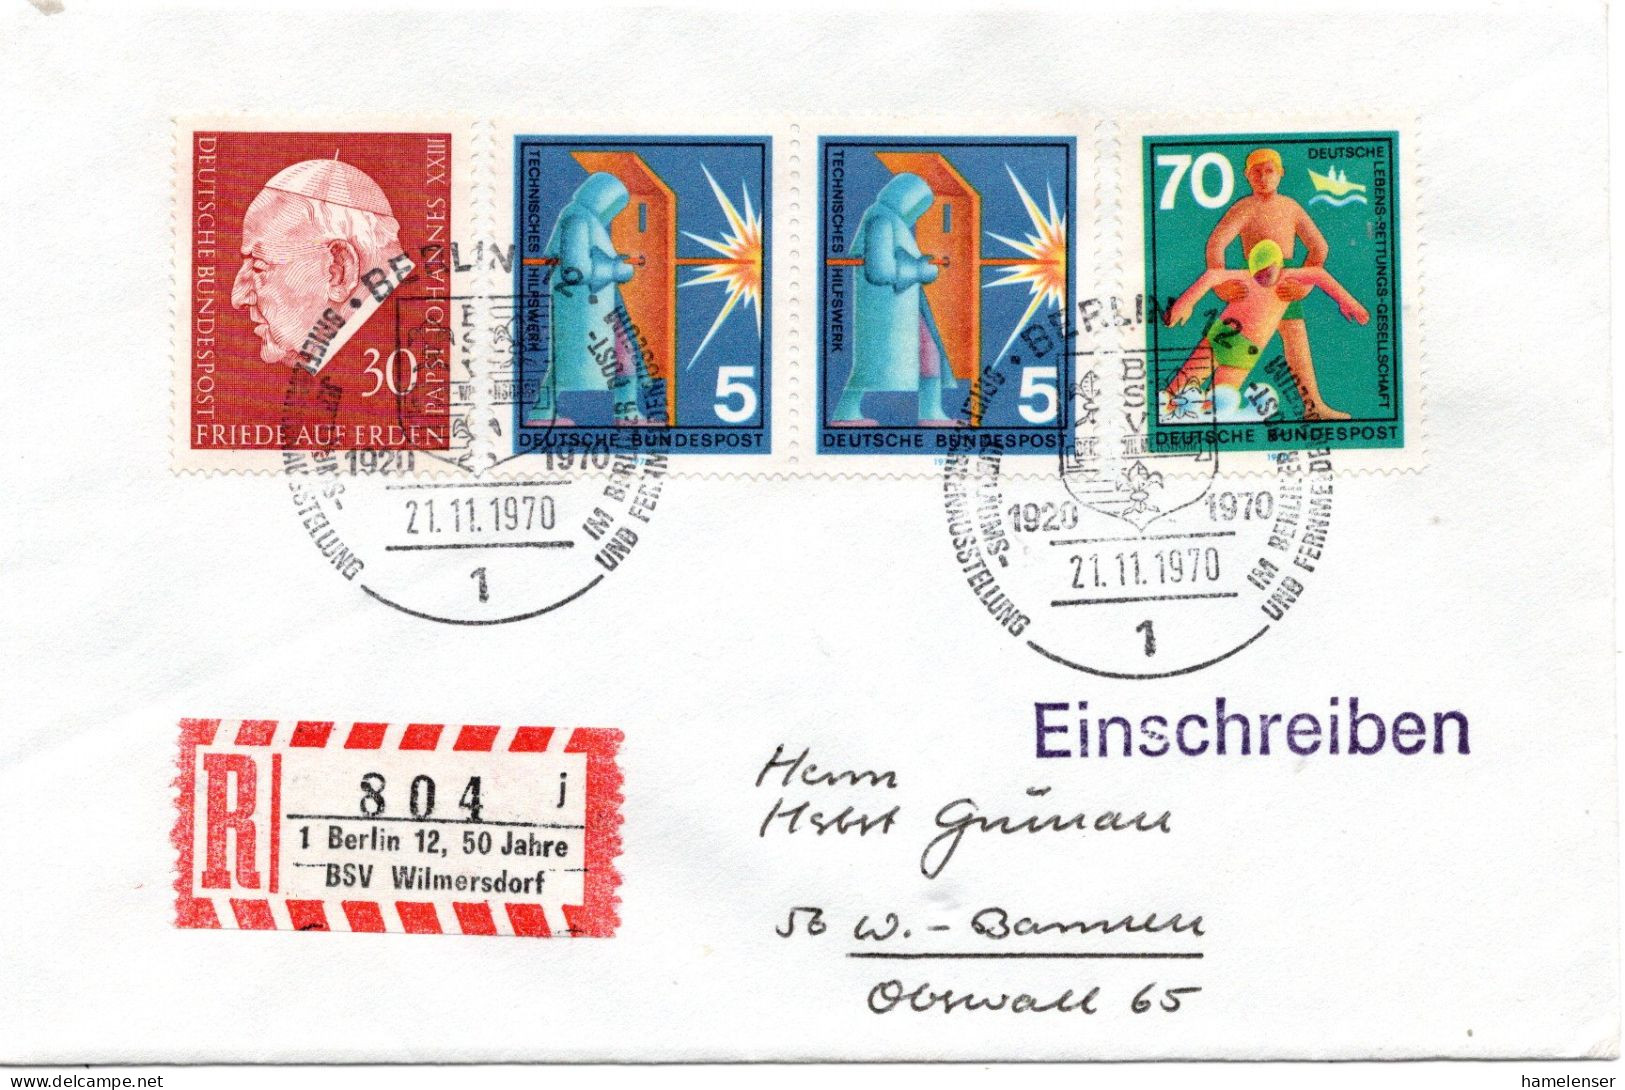 74881 - Bund - 1970 - 70Pfg DLRG MiF A R-Bf BERLIN - 50 JAHRE BSV WILMERSDORF -> Wuppertal, M So-R-Zettel - Covers & Documents